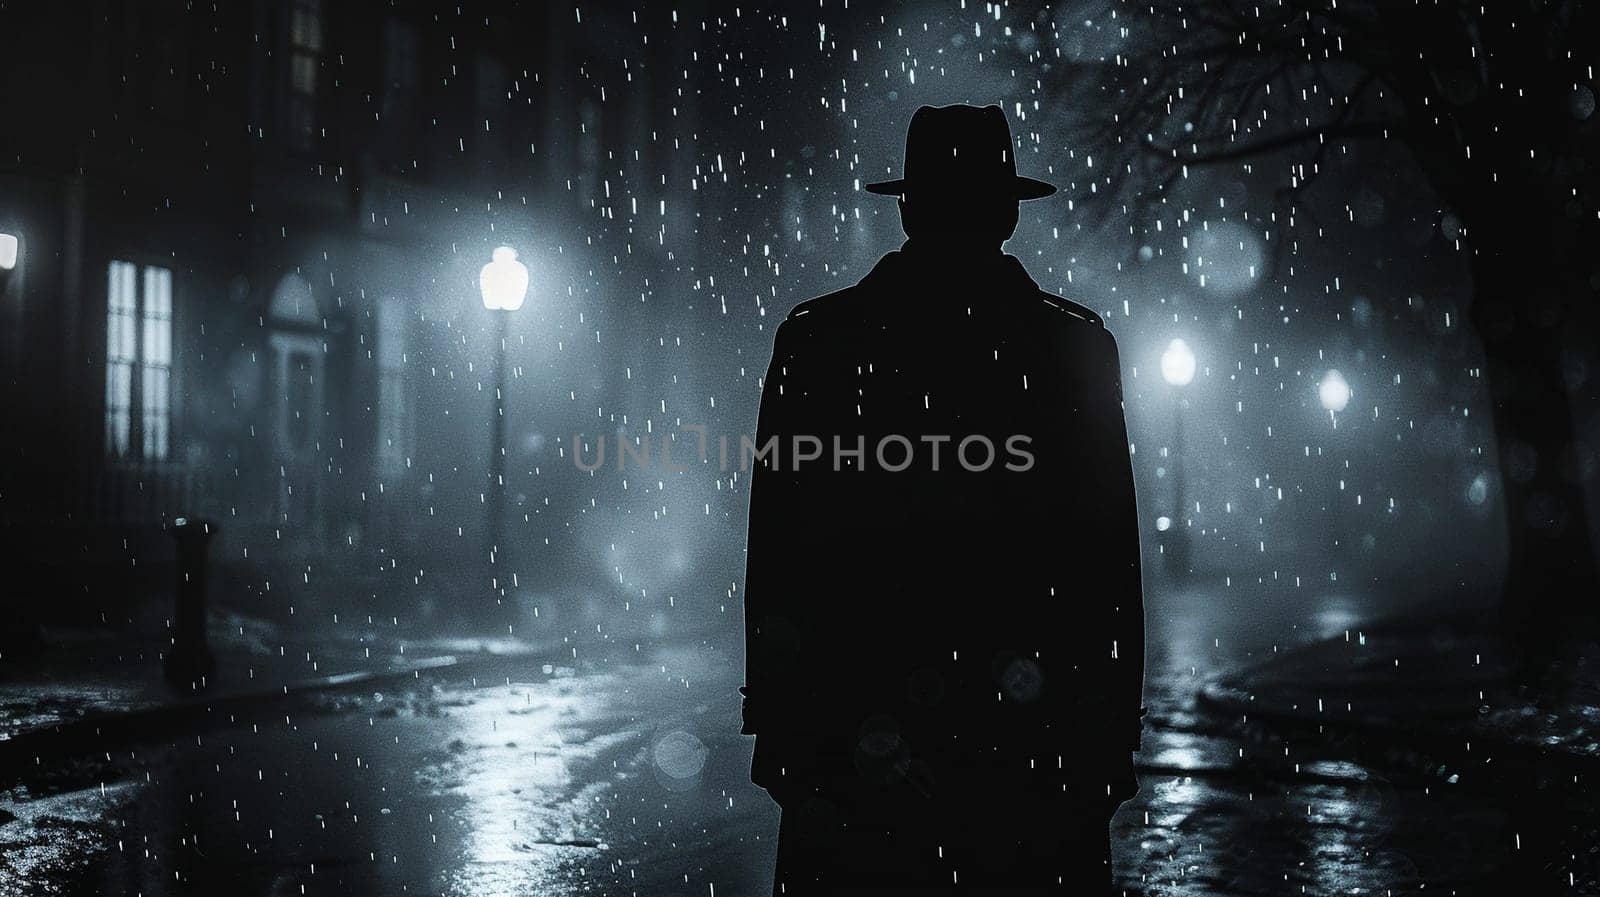 Monochrome Pixelation of a Mysterious Noir Scene A vintage detective scene blurs into stark black and white pixels by Benzoix